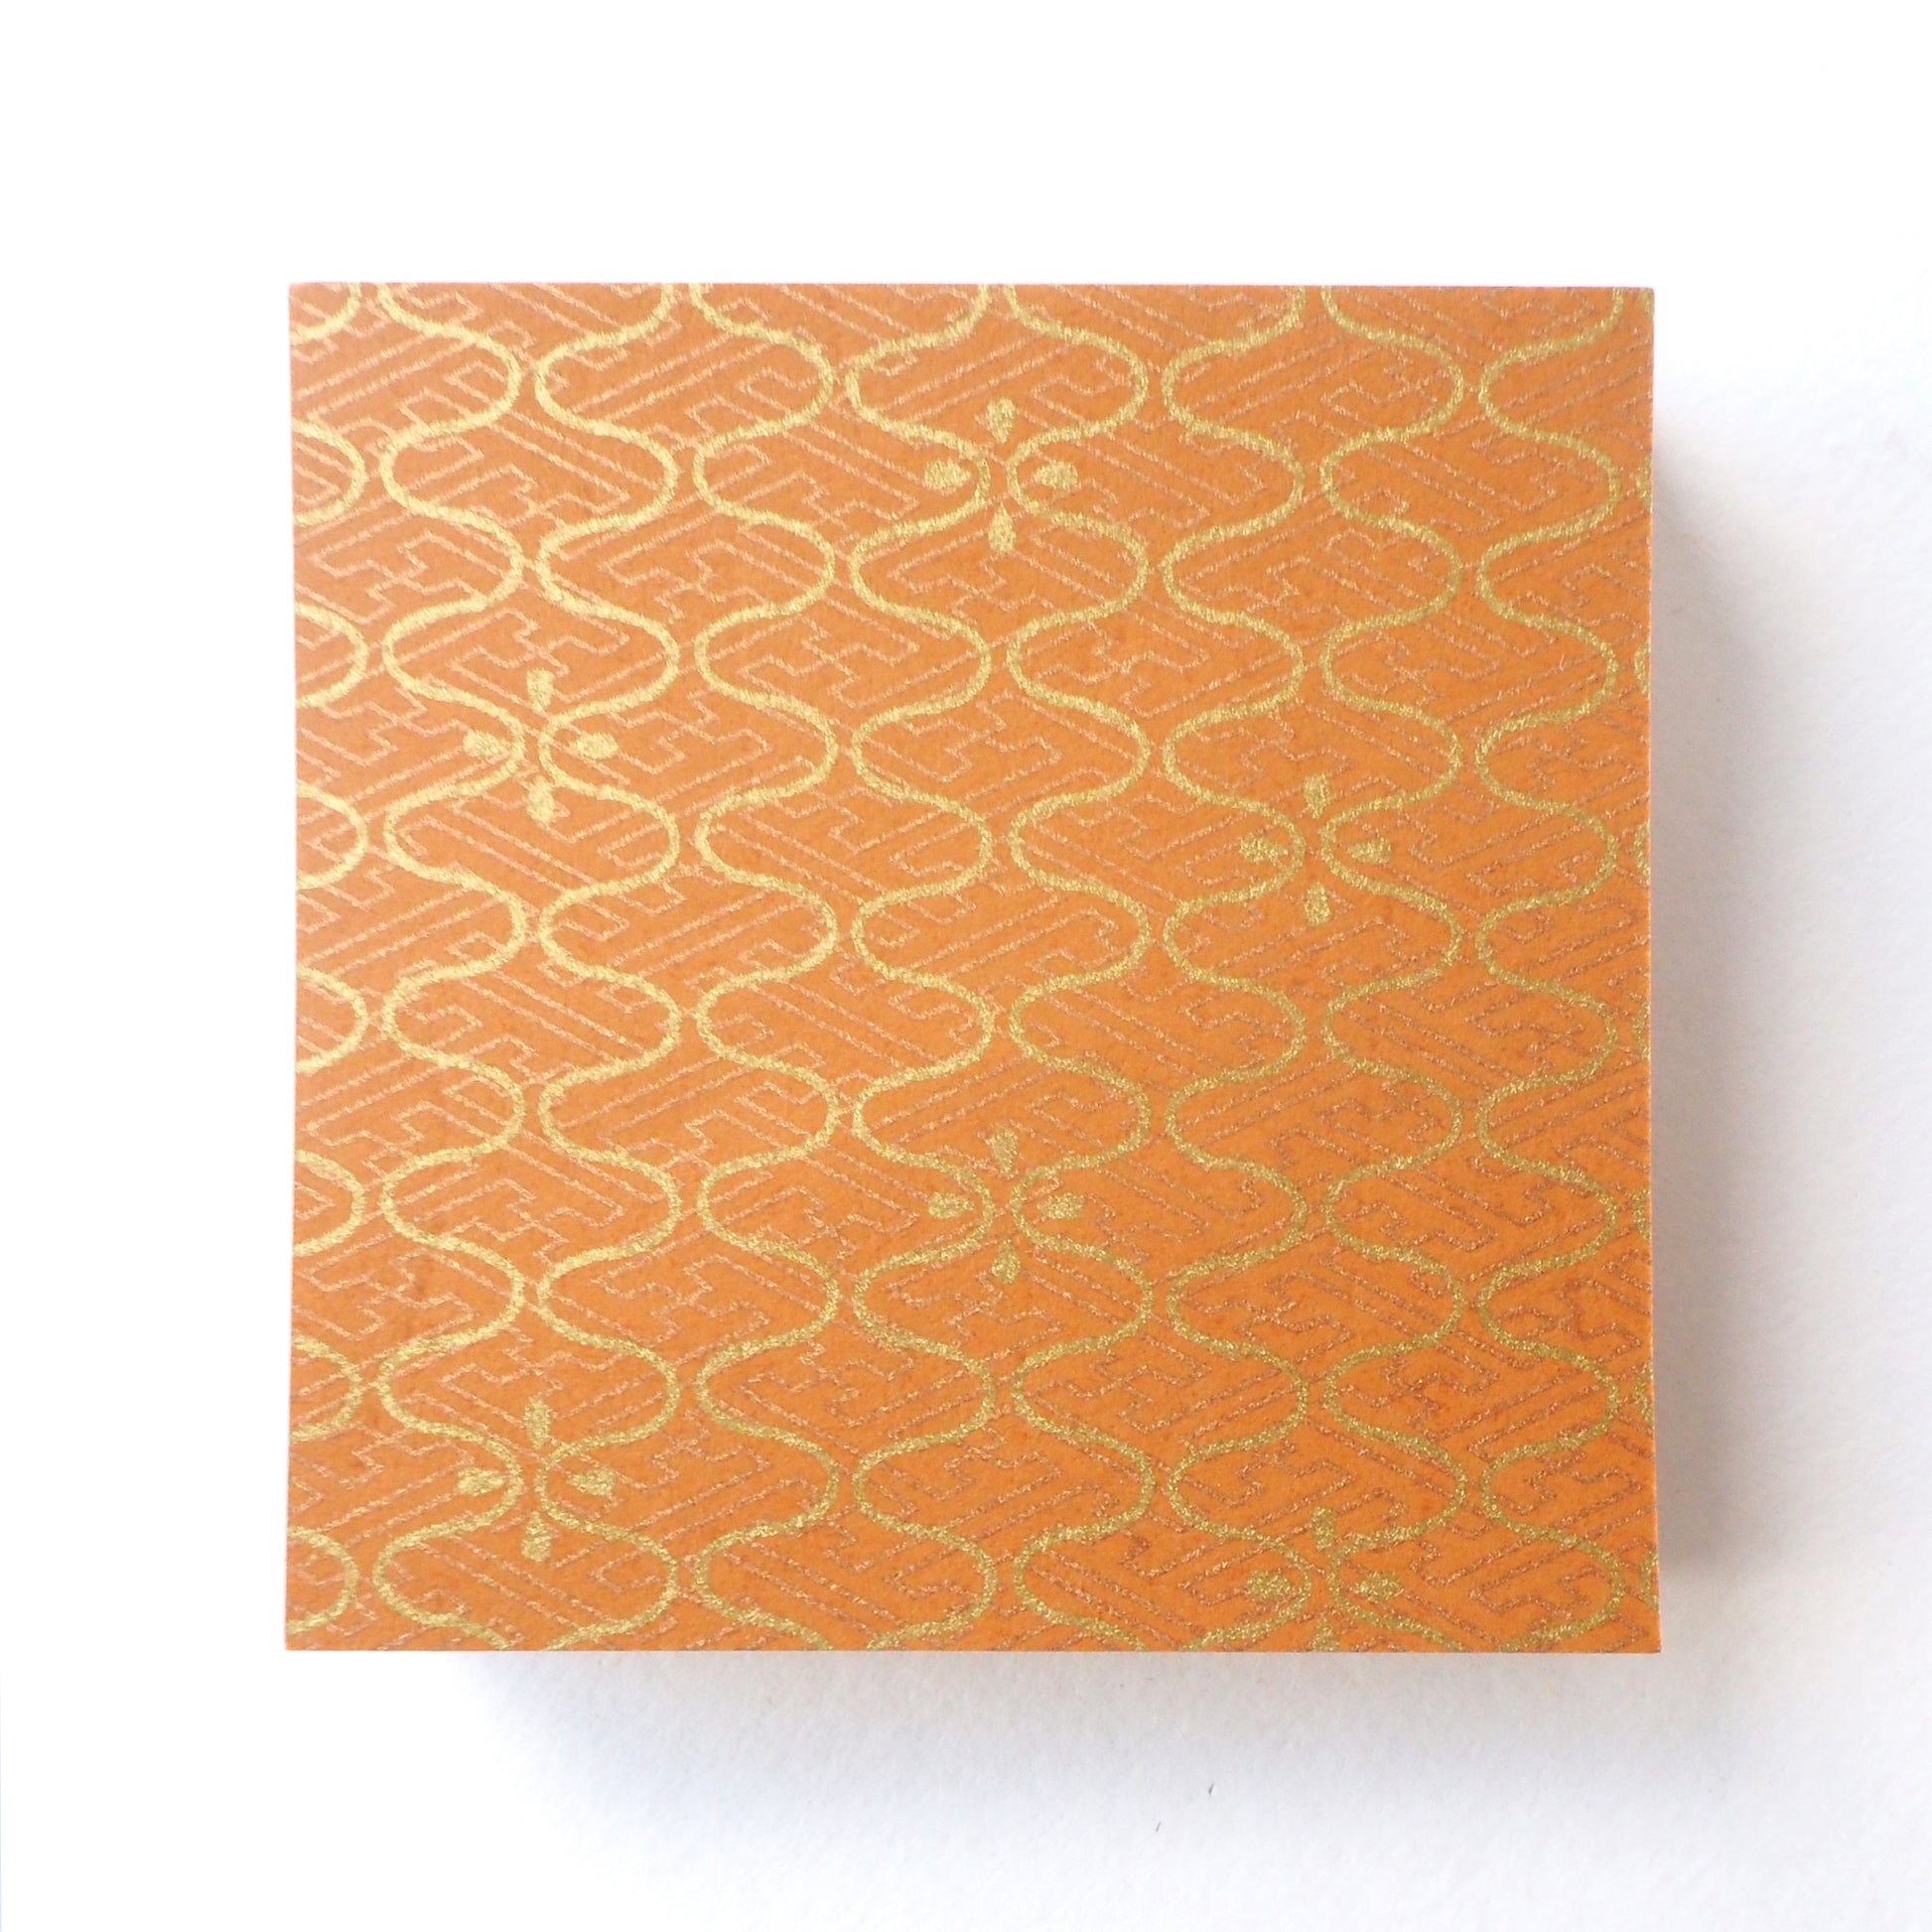 Pack of 100 Sheets 7x7cm Yuzen Washi Origami Paper HZ-069 - Sayagata & Fishing Net Brown Gold - washi paper - Lavender Home London